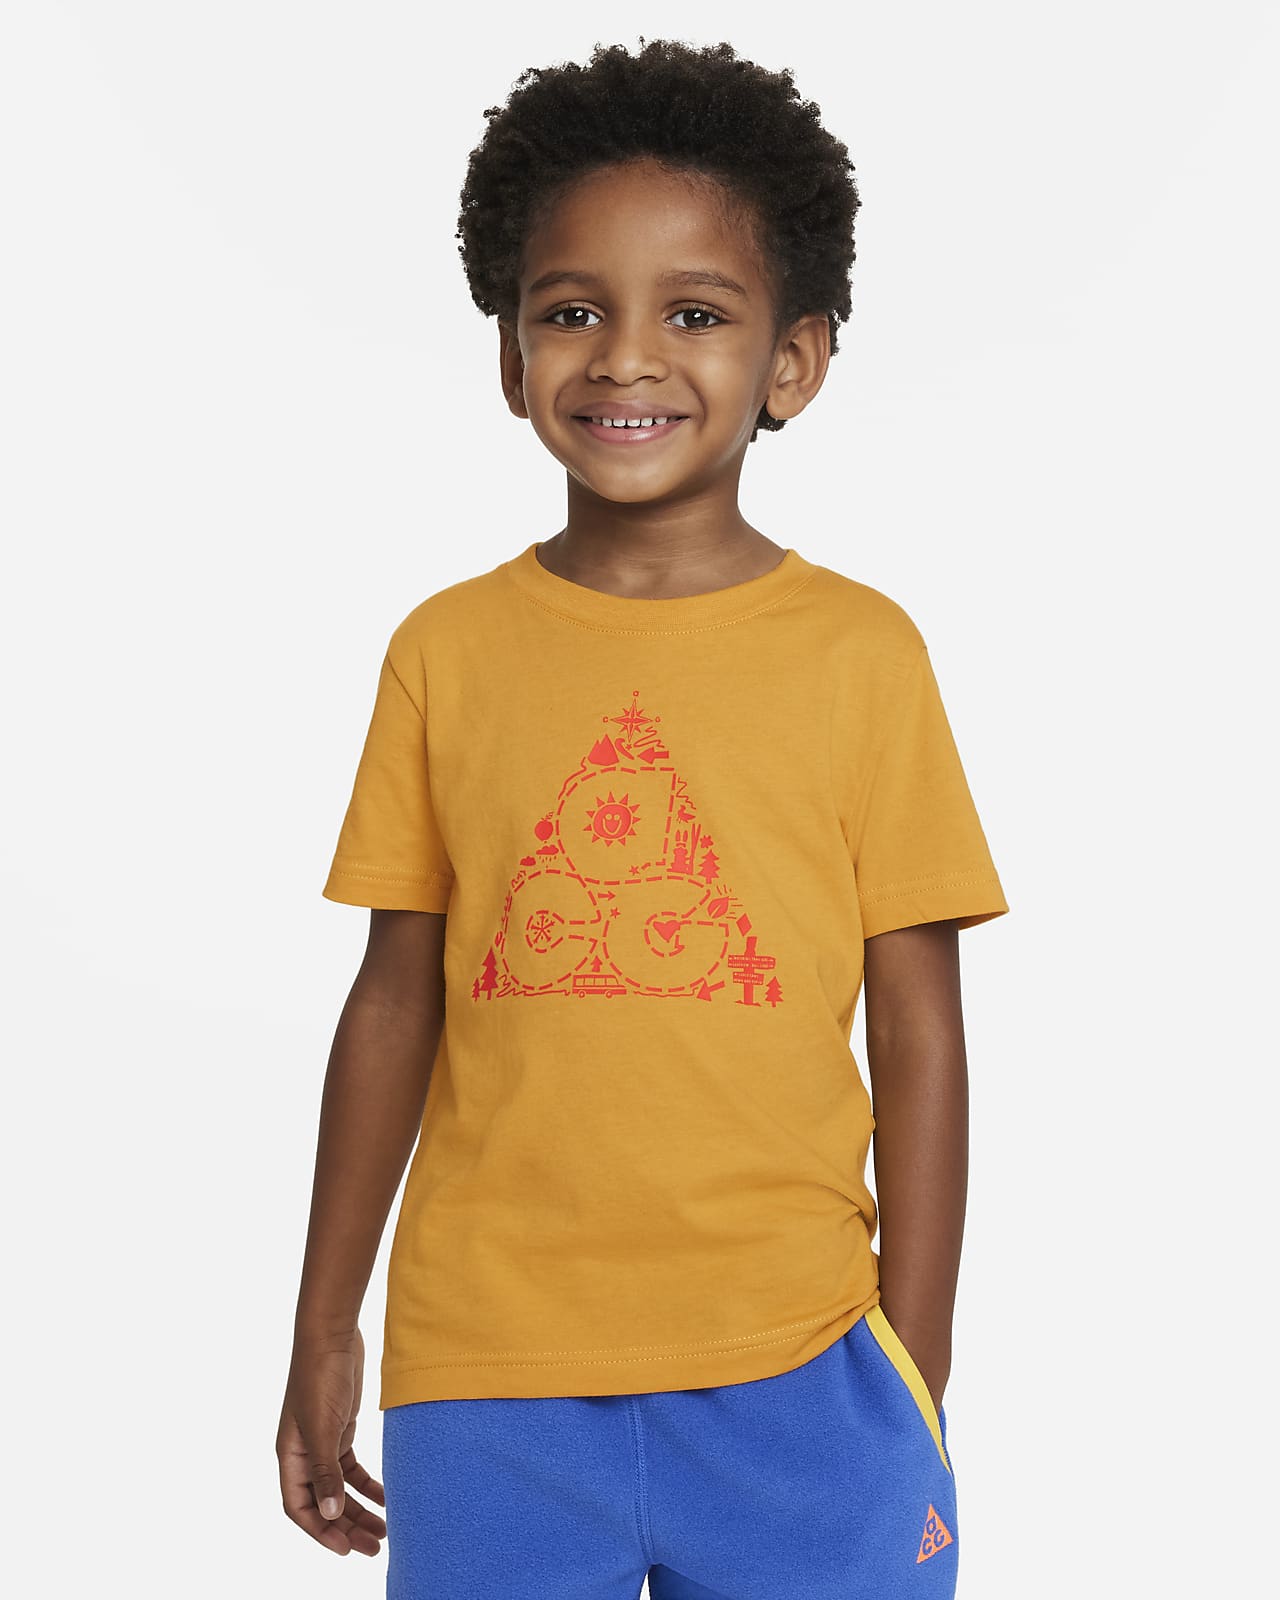 Nike Camiseta ACG - Niño/a pequeño/a